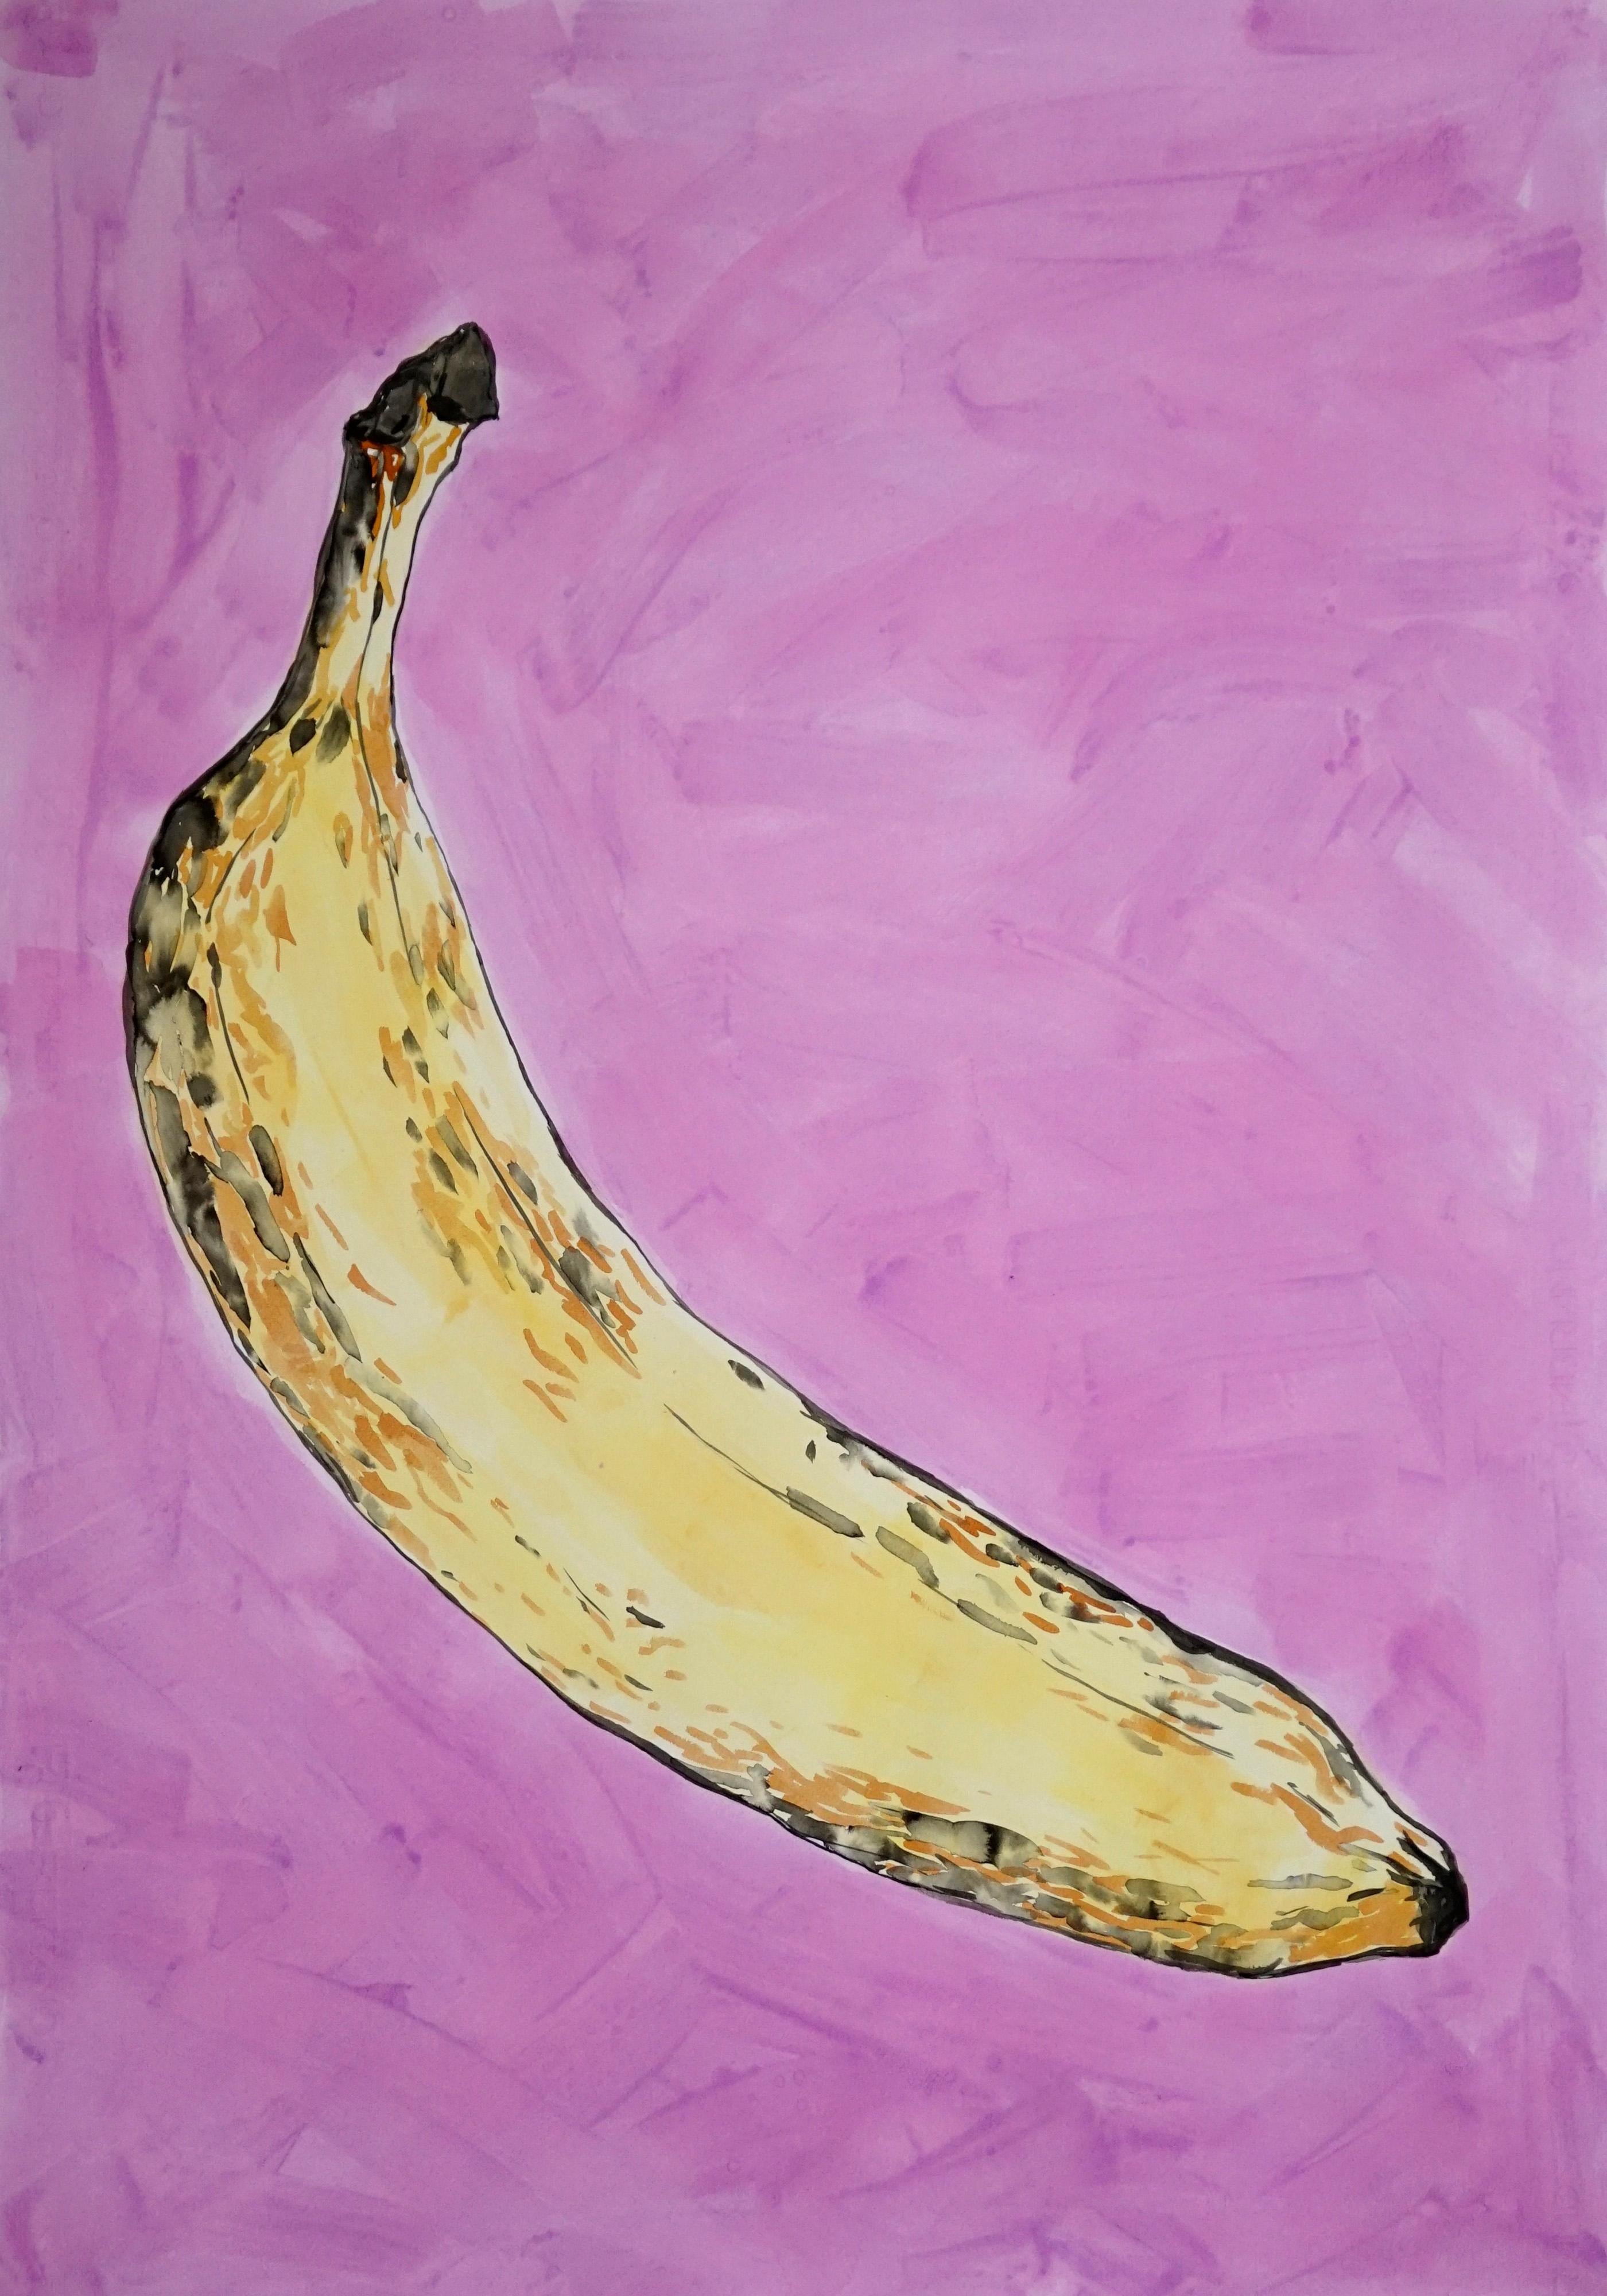 Yellow Banana on Purple, Contemporary Still-Life Painting, Watercolor on Paper - Art by Ryan Rivadeneyra